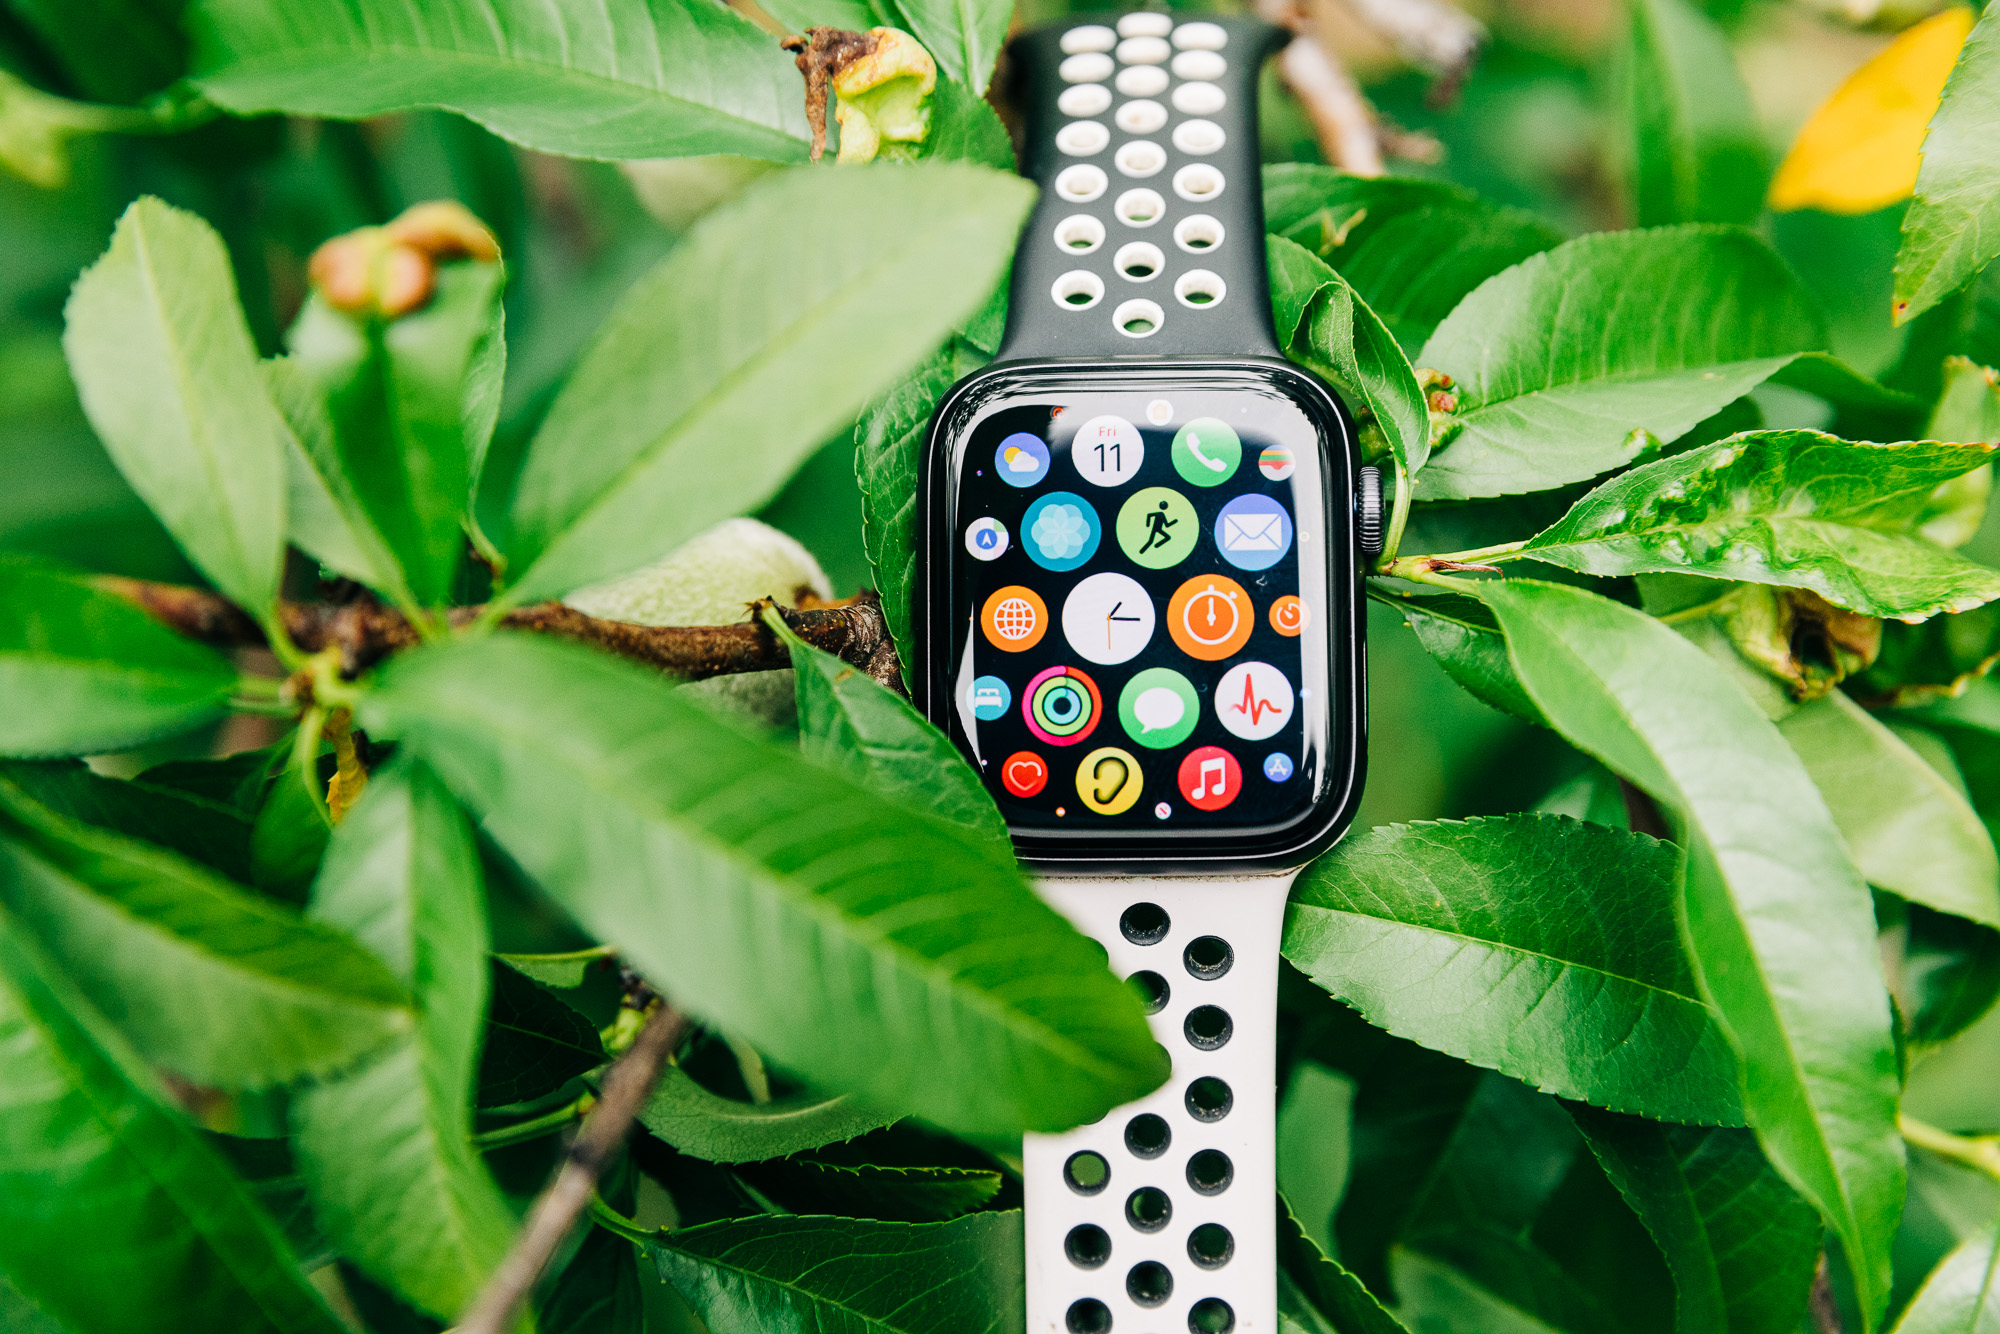 Apple Watch Series 6: The Best Fitness Tracker Watch